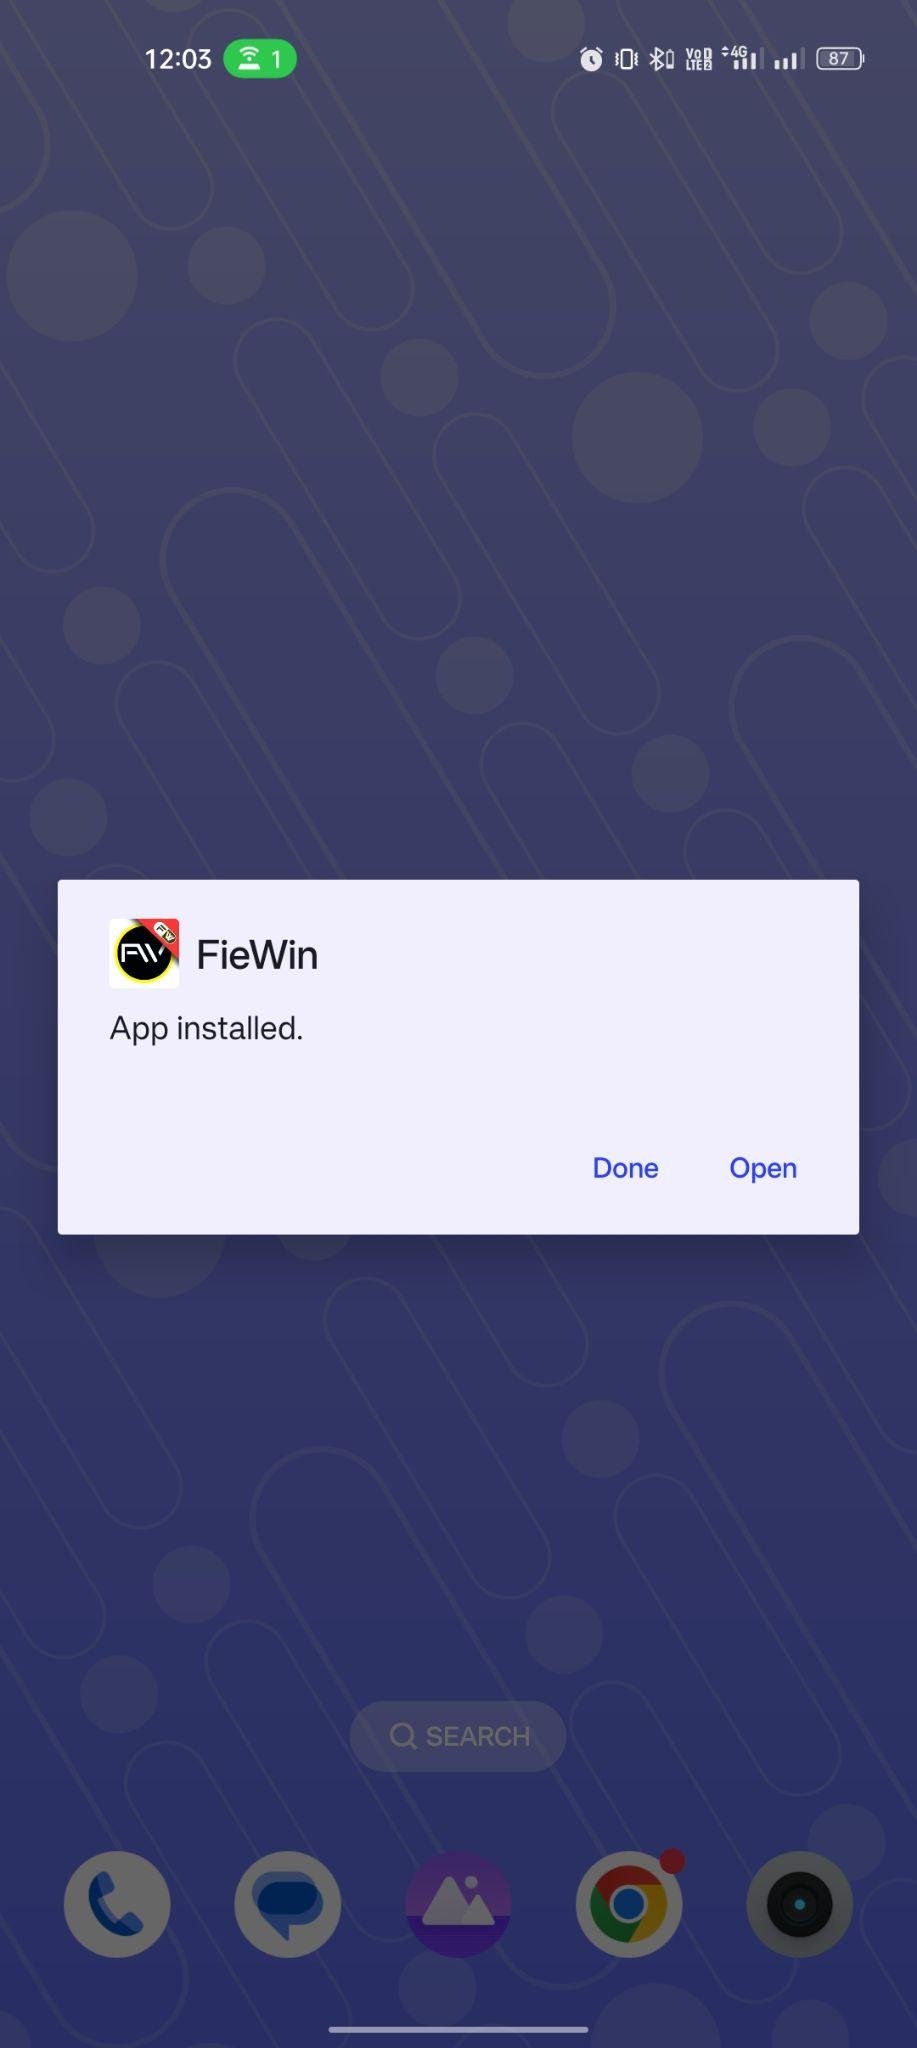 FieWin apk installed